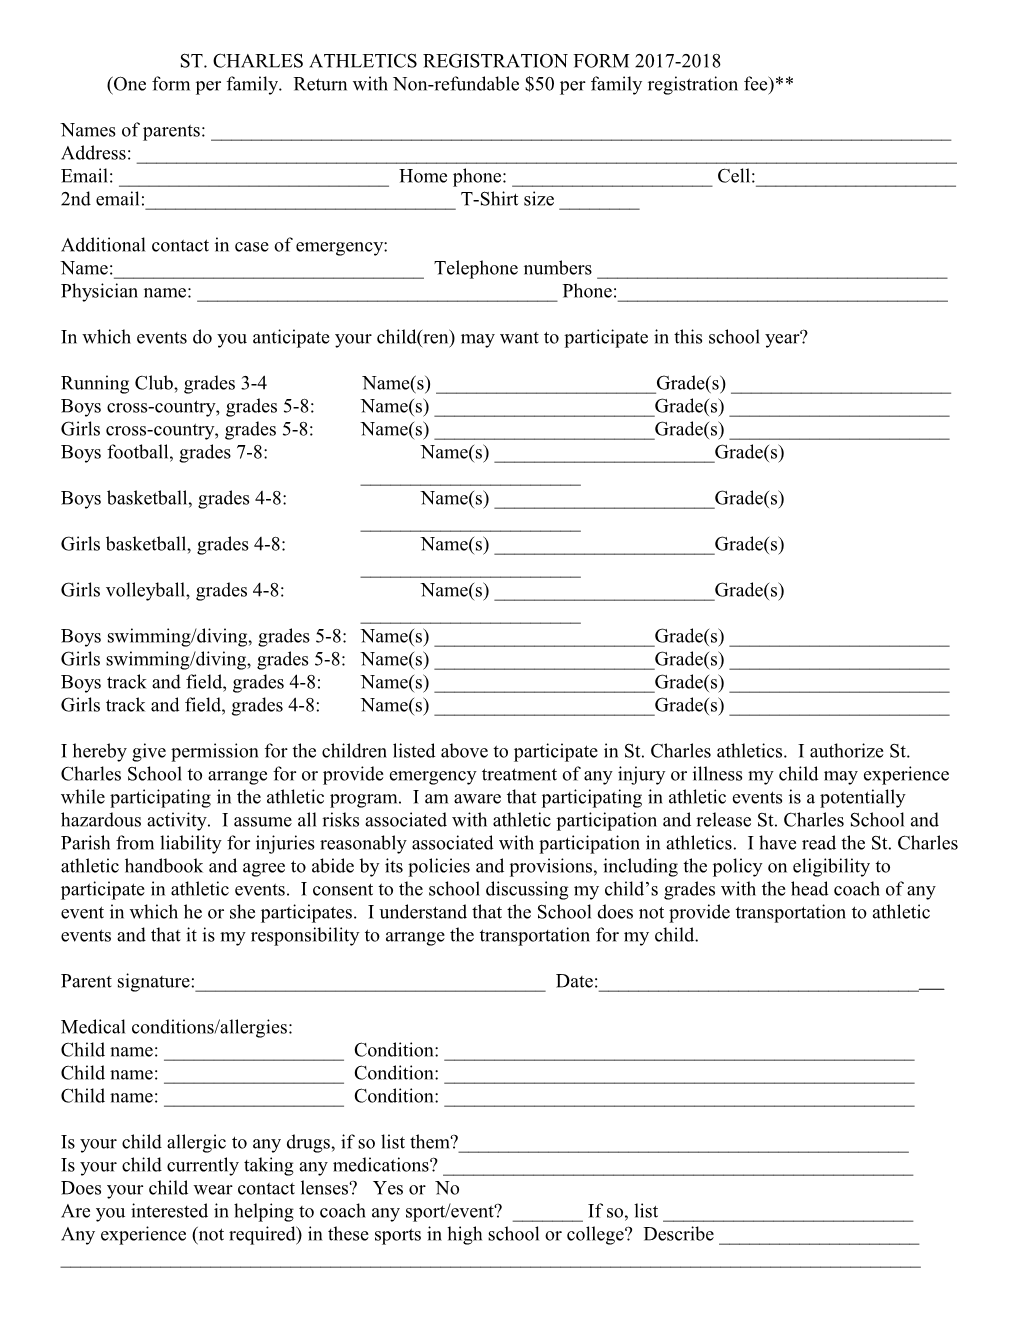 St. Charles Athletics Registration Form 2017-2018